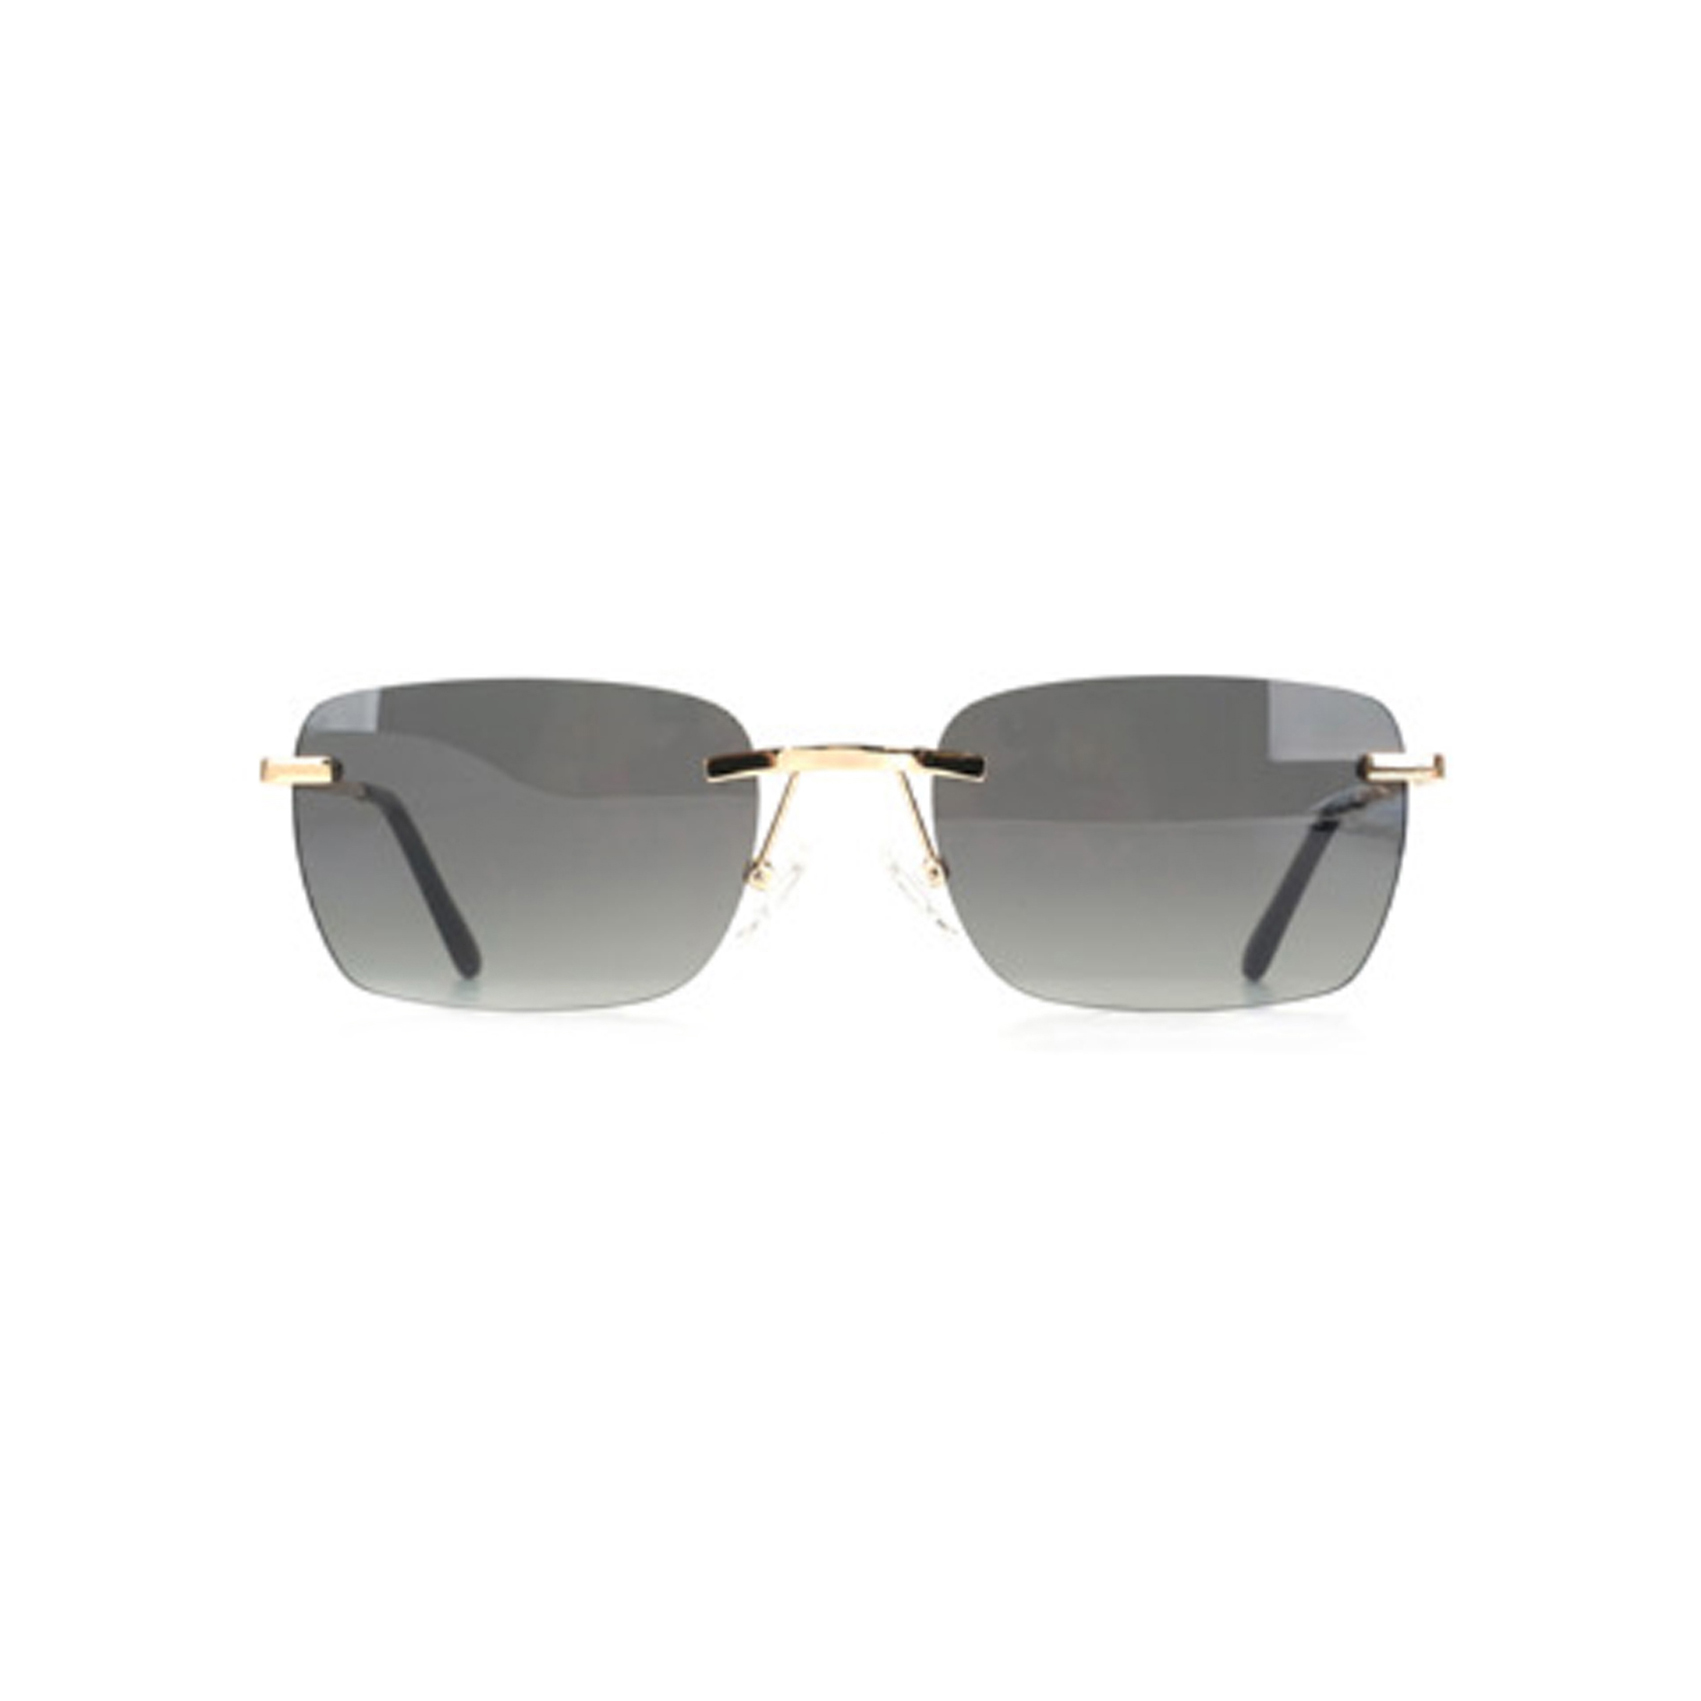 Fashionable Rimless Round Sunglasses Custom Sunglasses Manufacturer